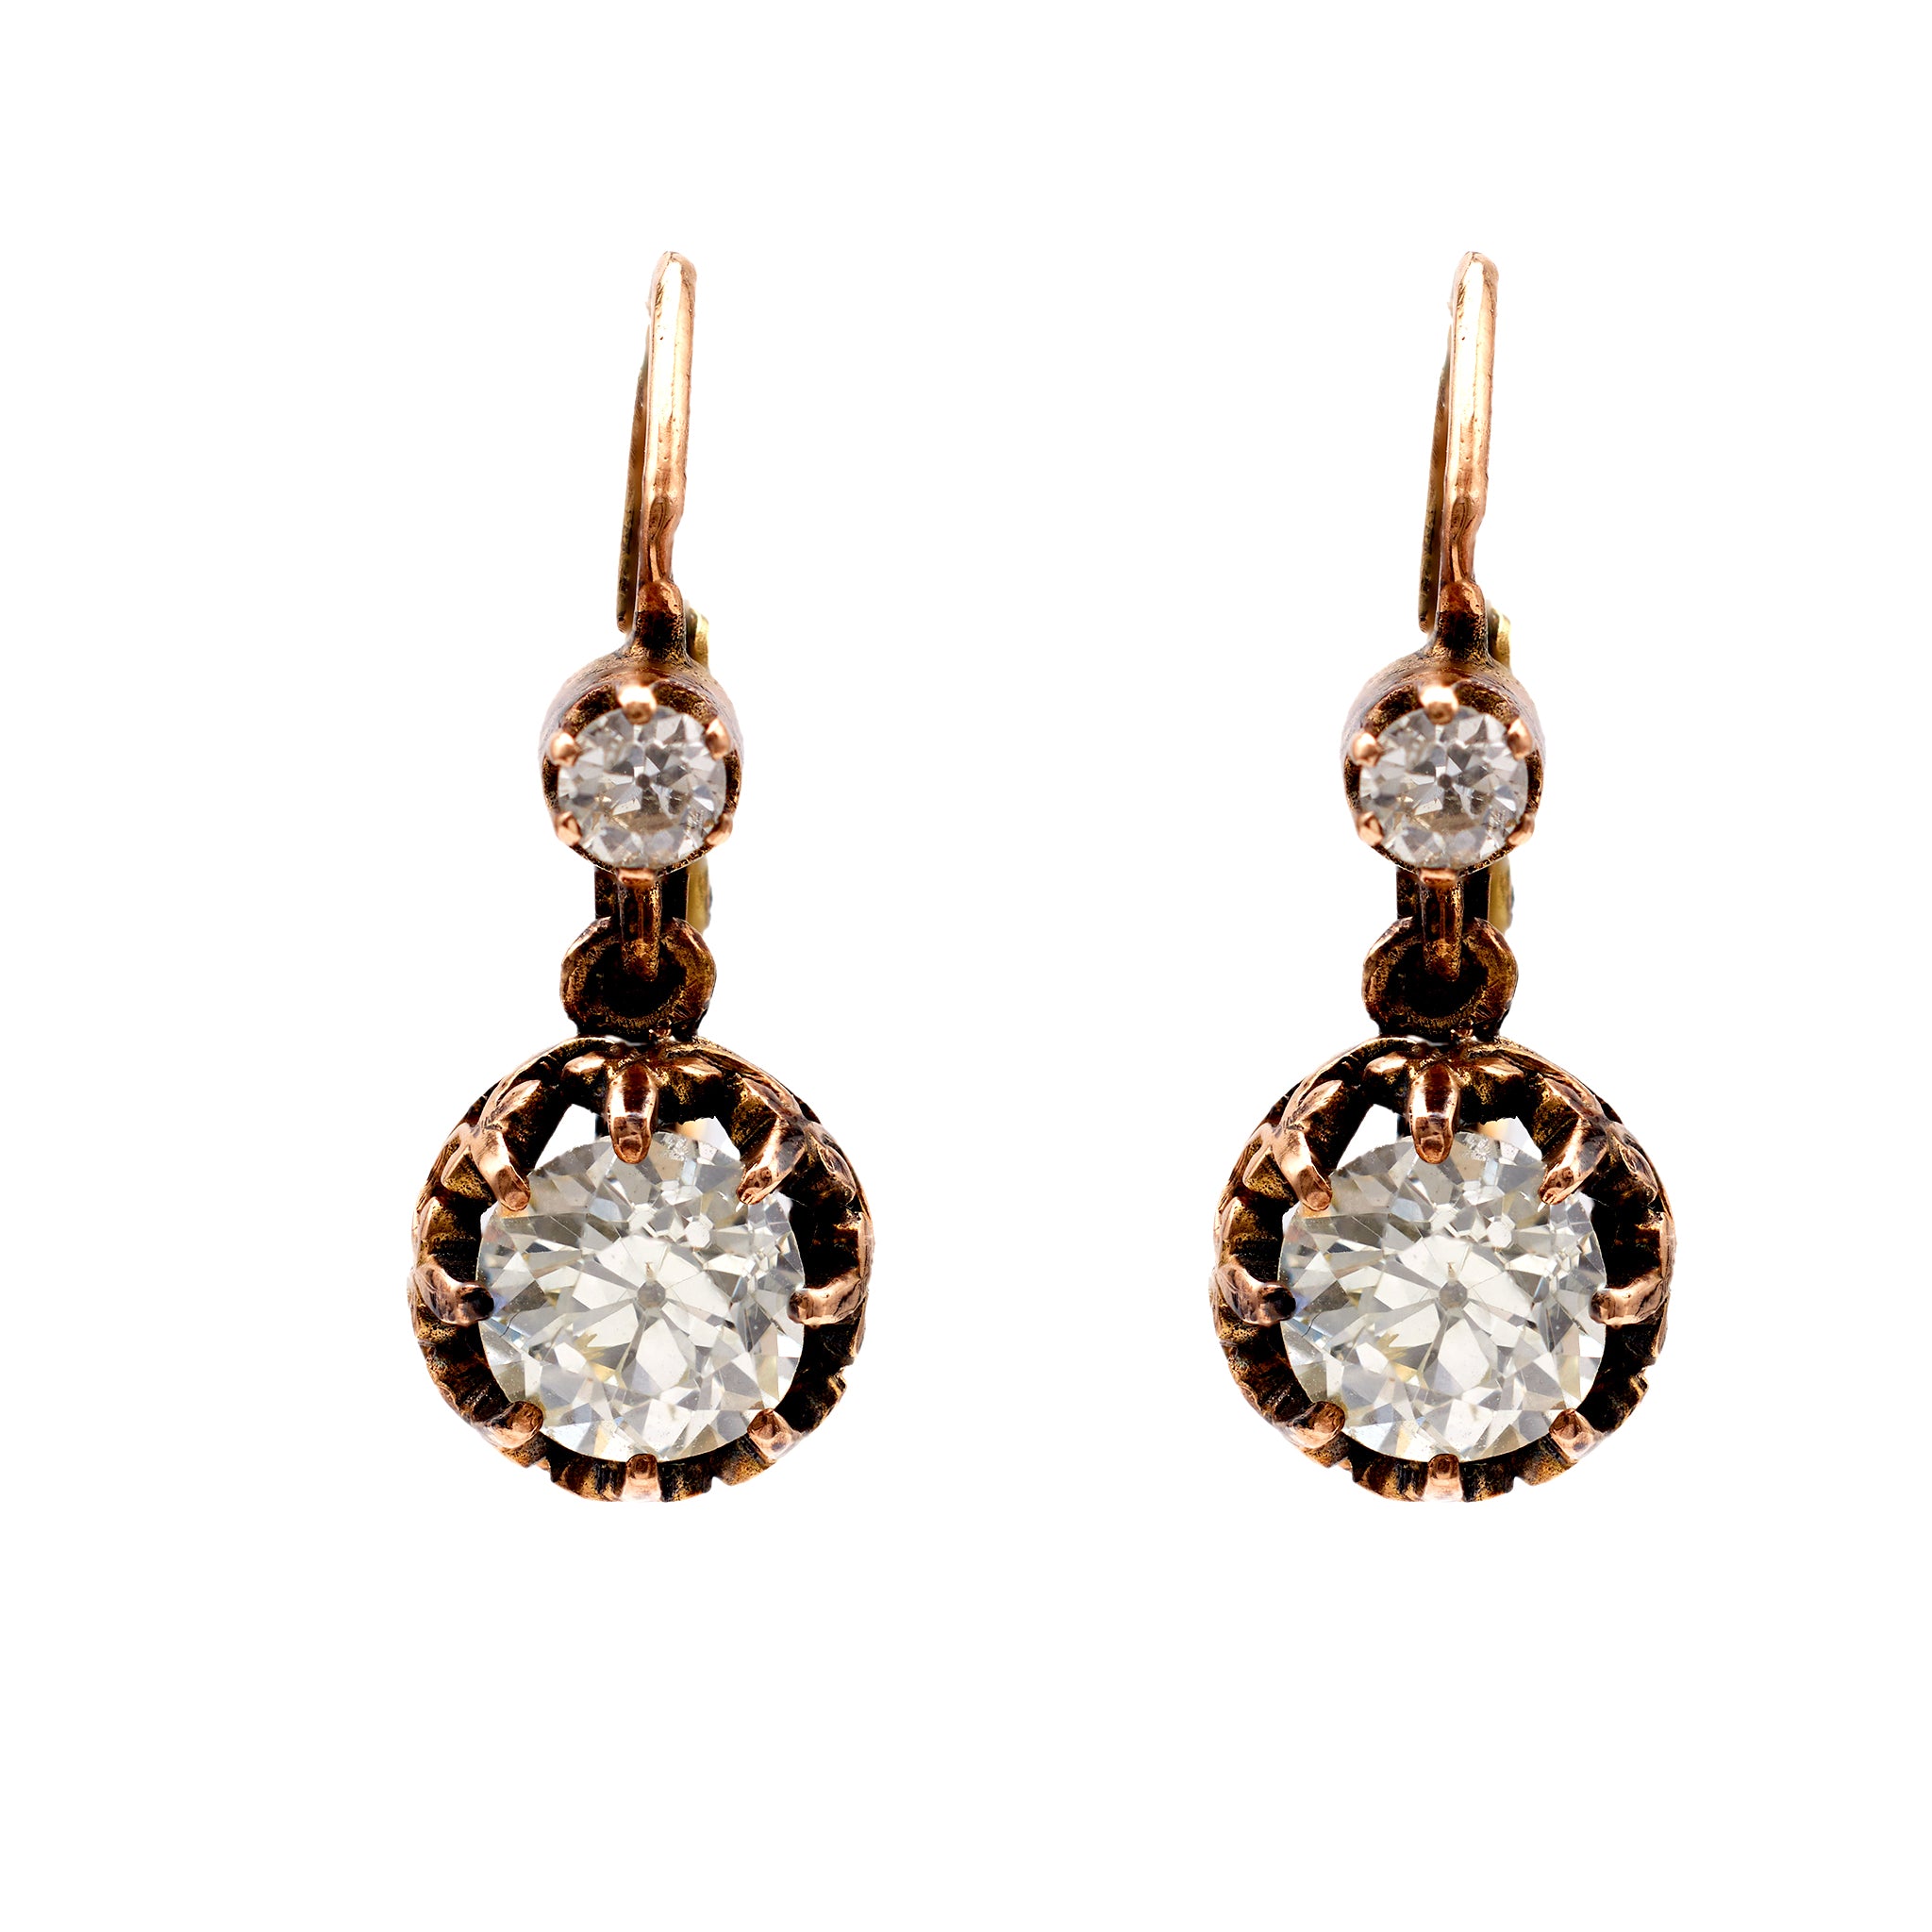 Antique Inspired 1.93 Carat Diamond 18k Gold Drop Earrings Earrings Jack Weir & Sons   